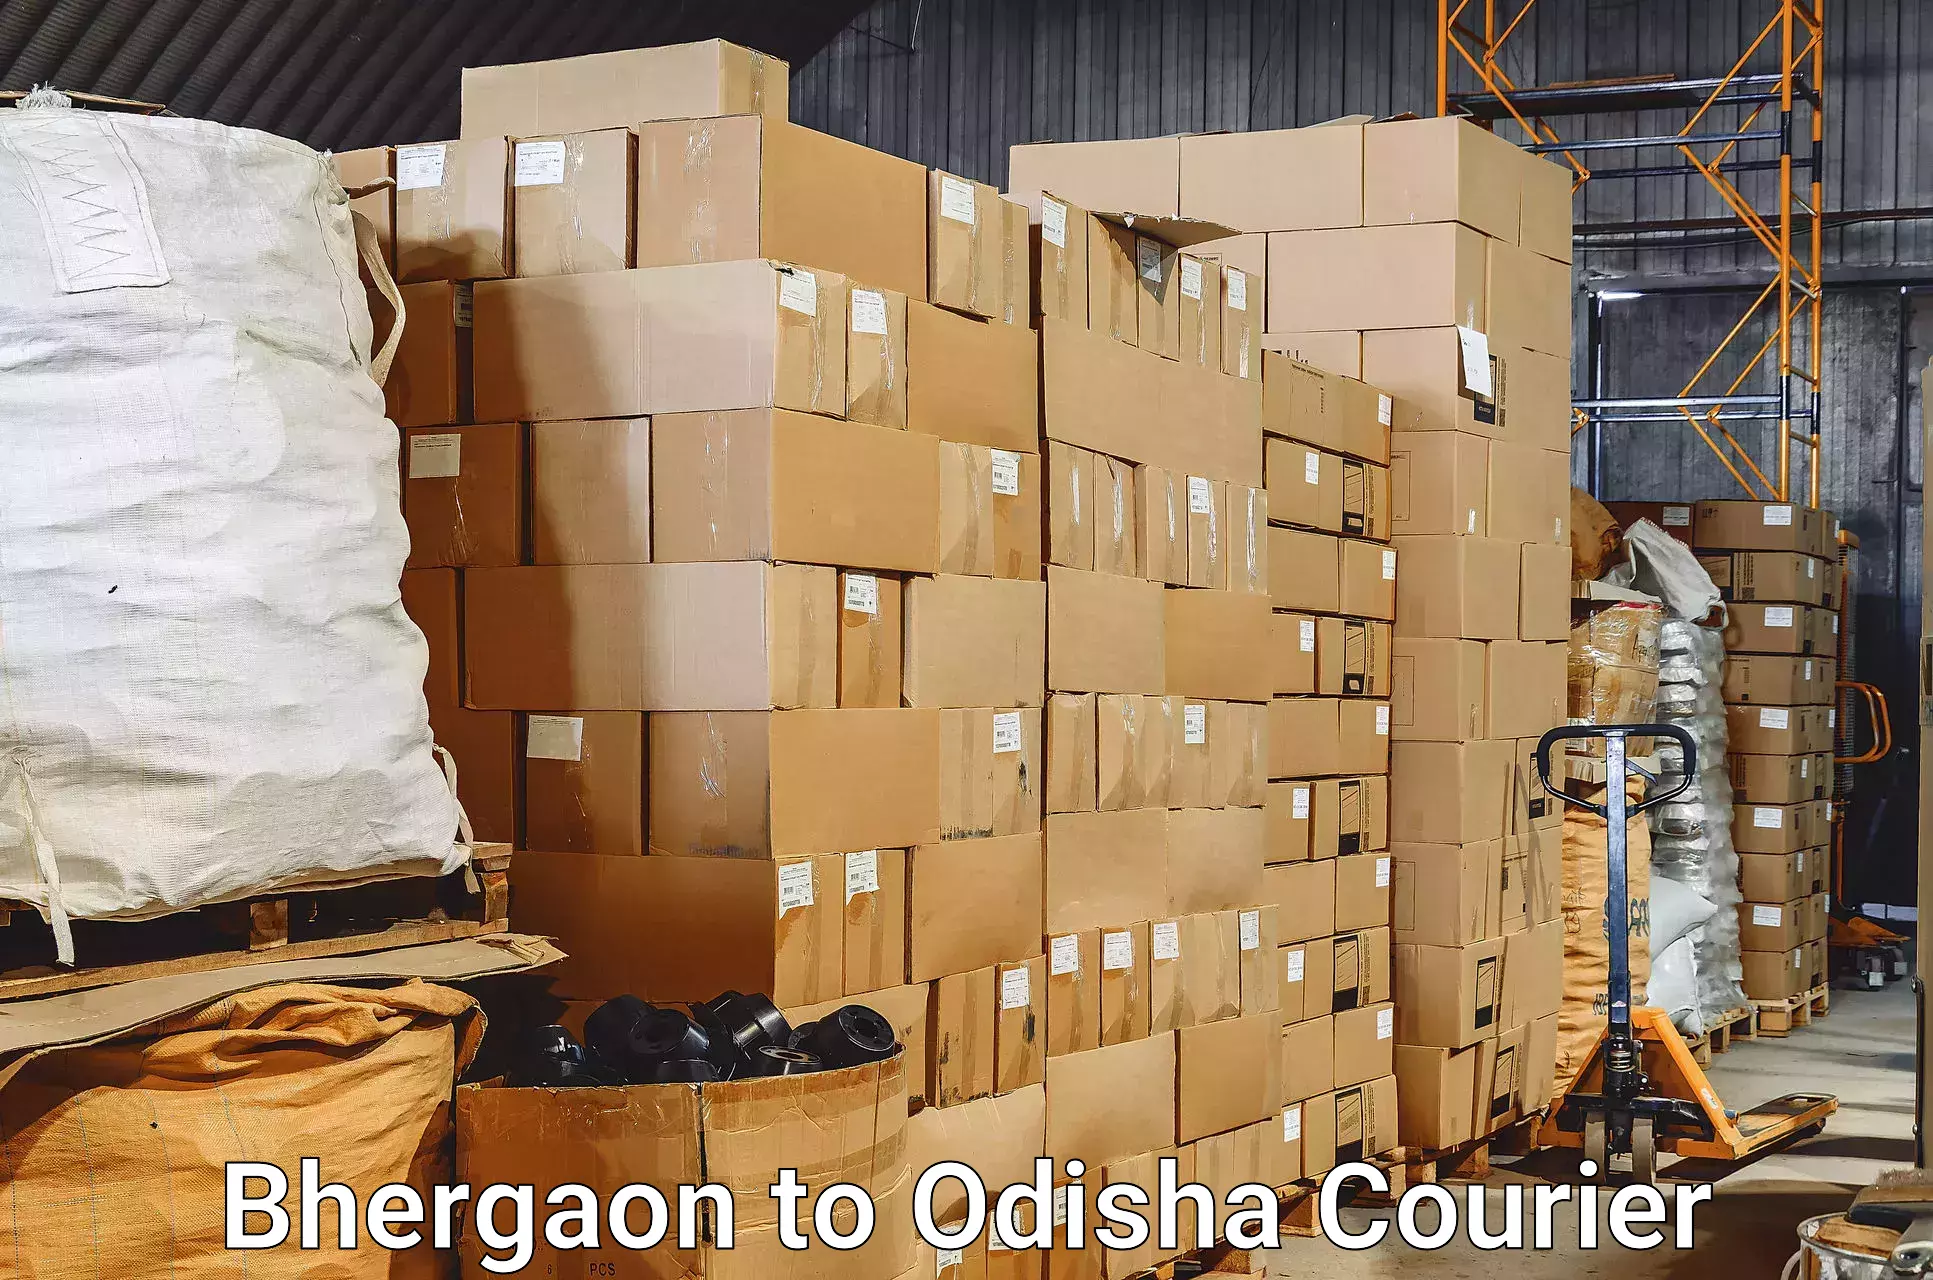 Luggage shipment specialists Bhergaon to Odisha